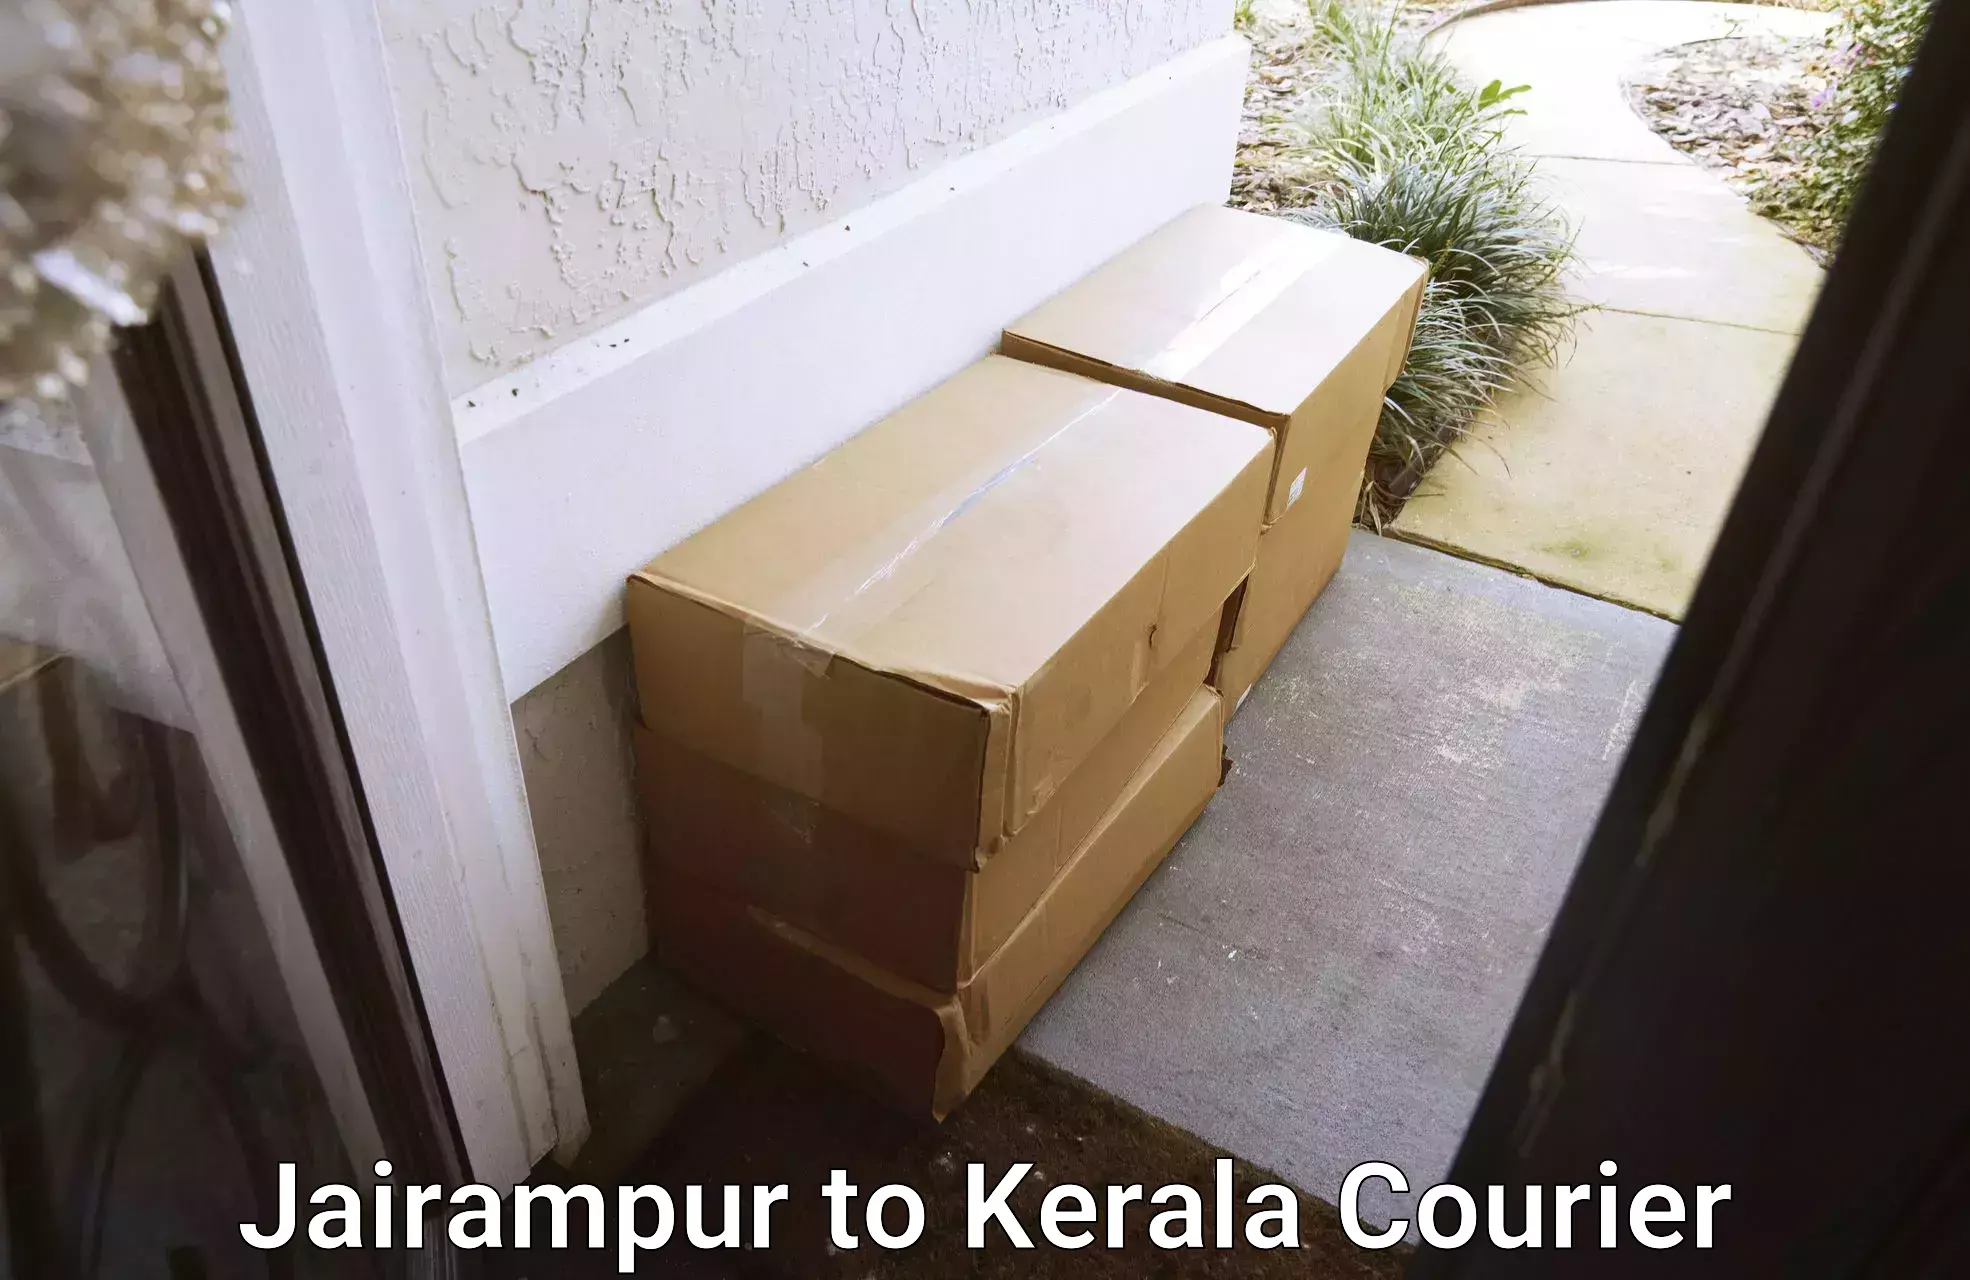 Same-day delivery options Jairampur to Cochin Port Kochi